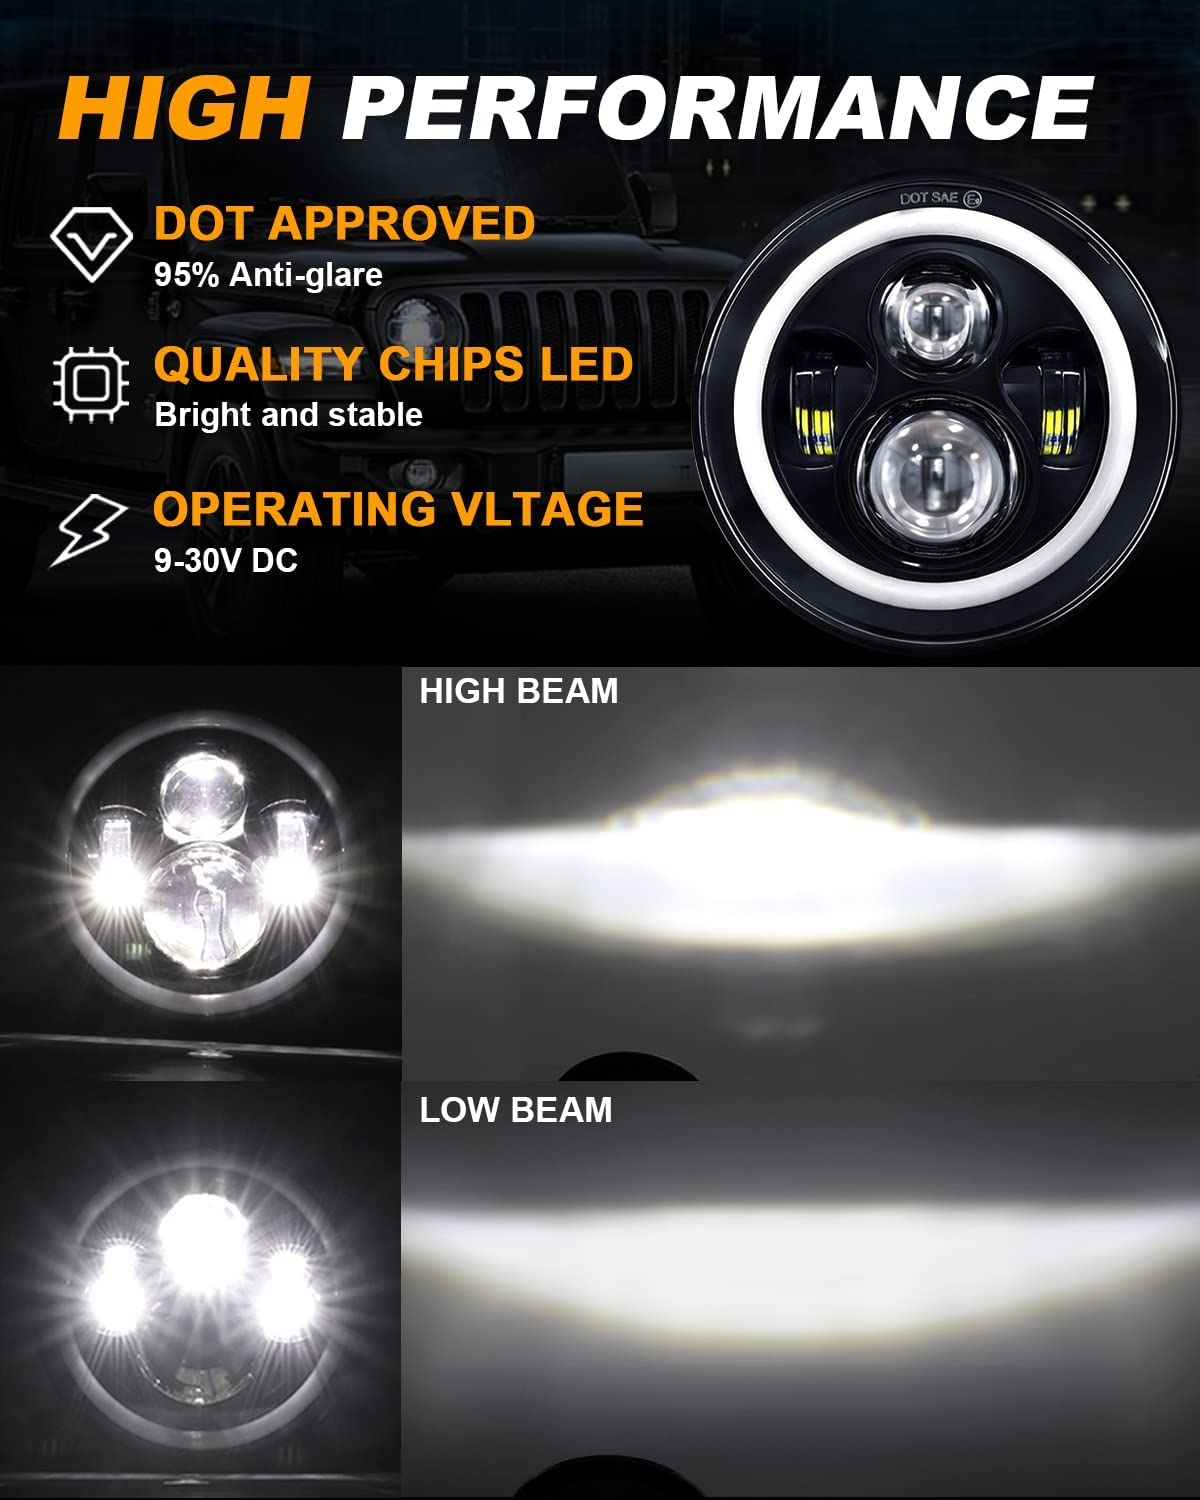 Low Beam LED Headlights